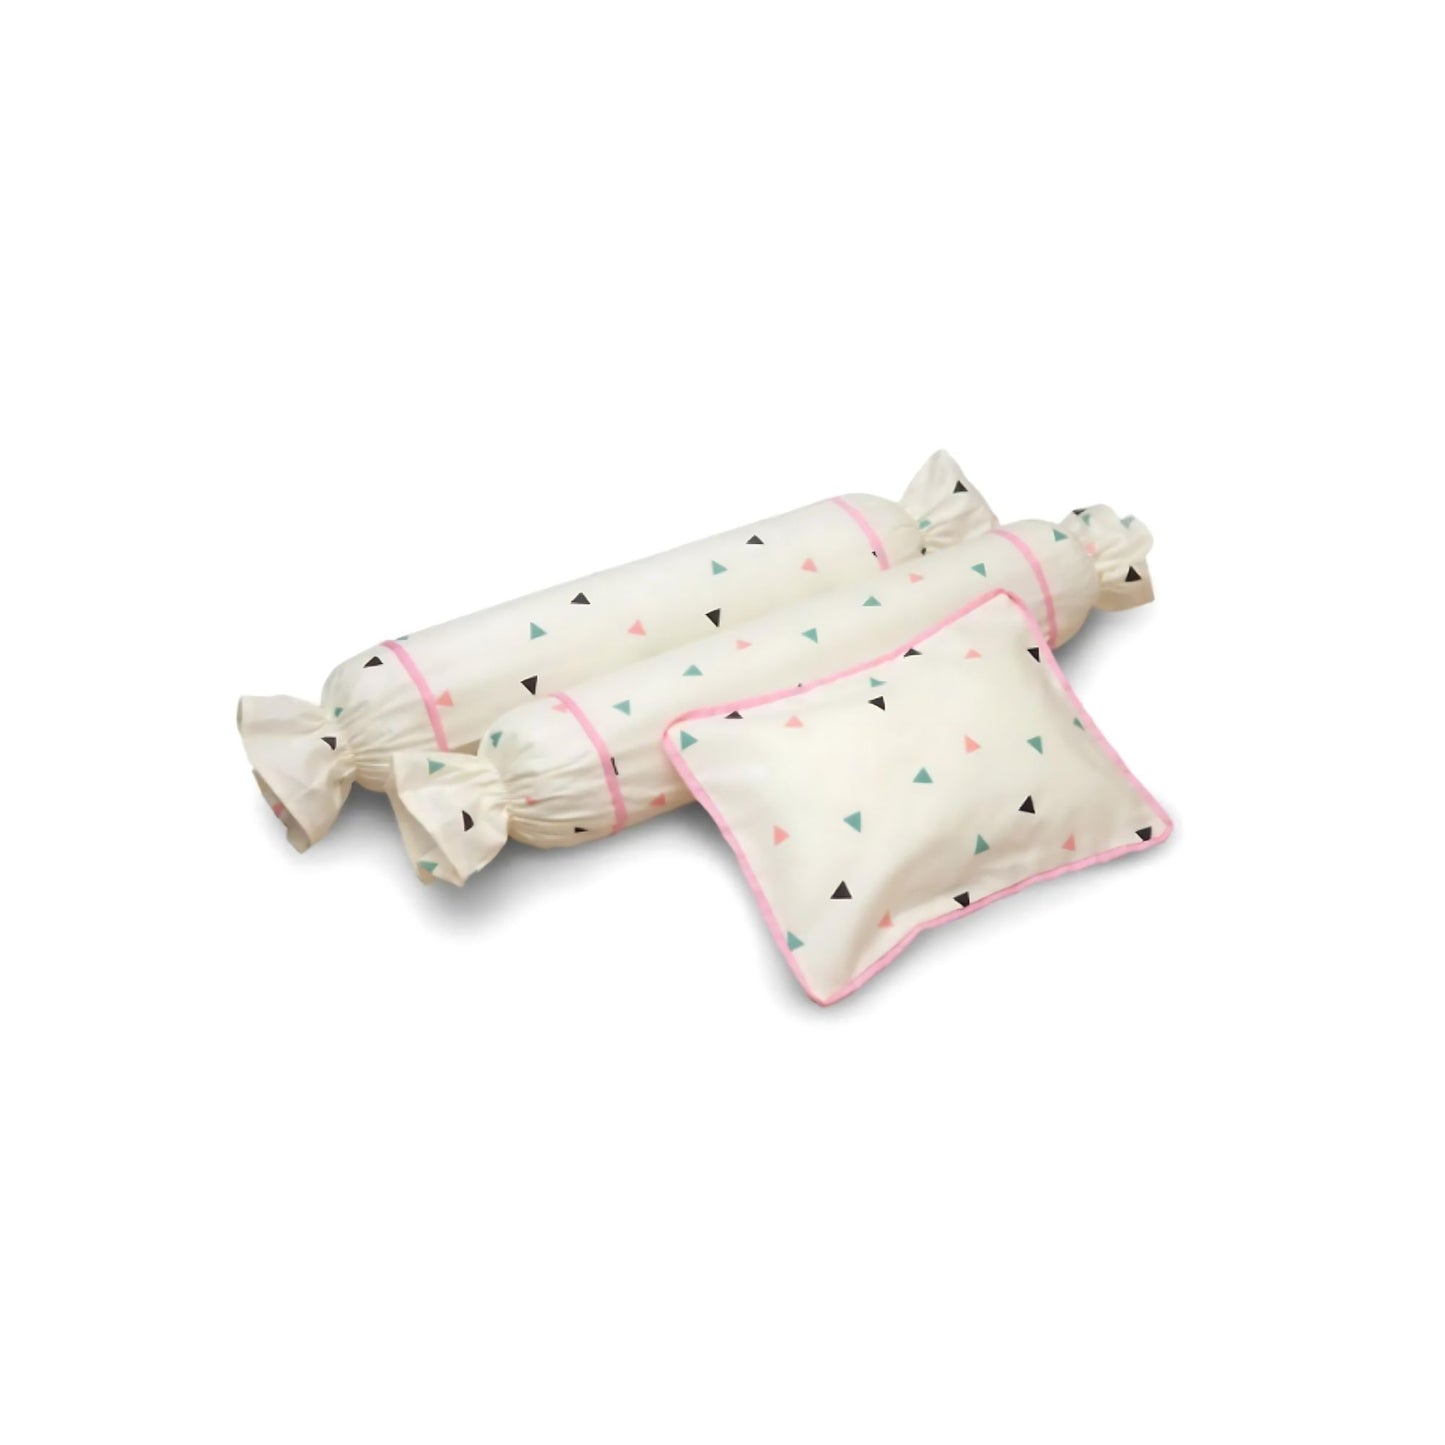 Zyji Baby Pillowcase Set